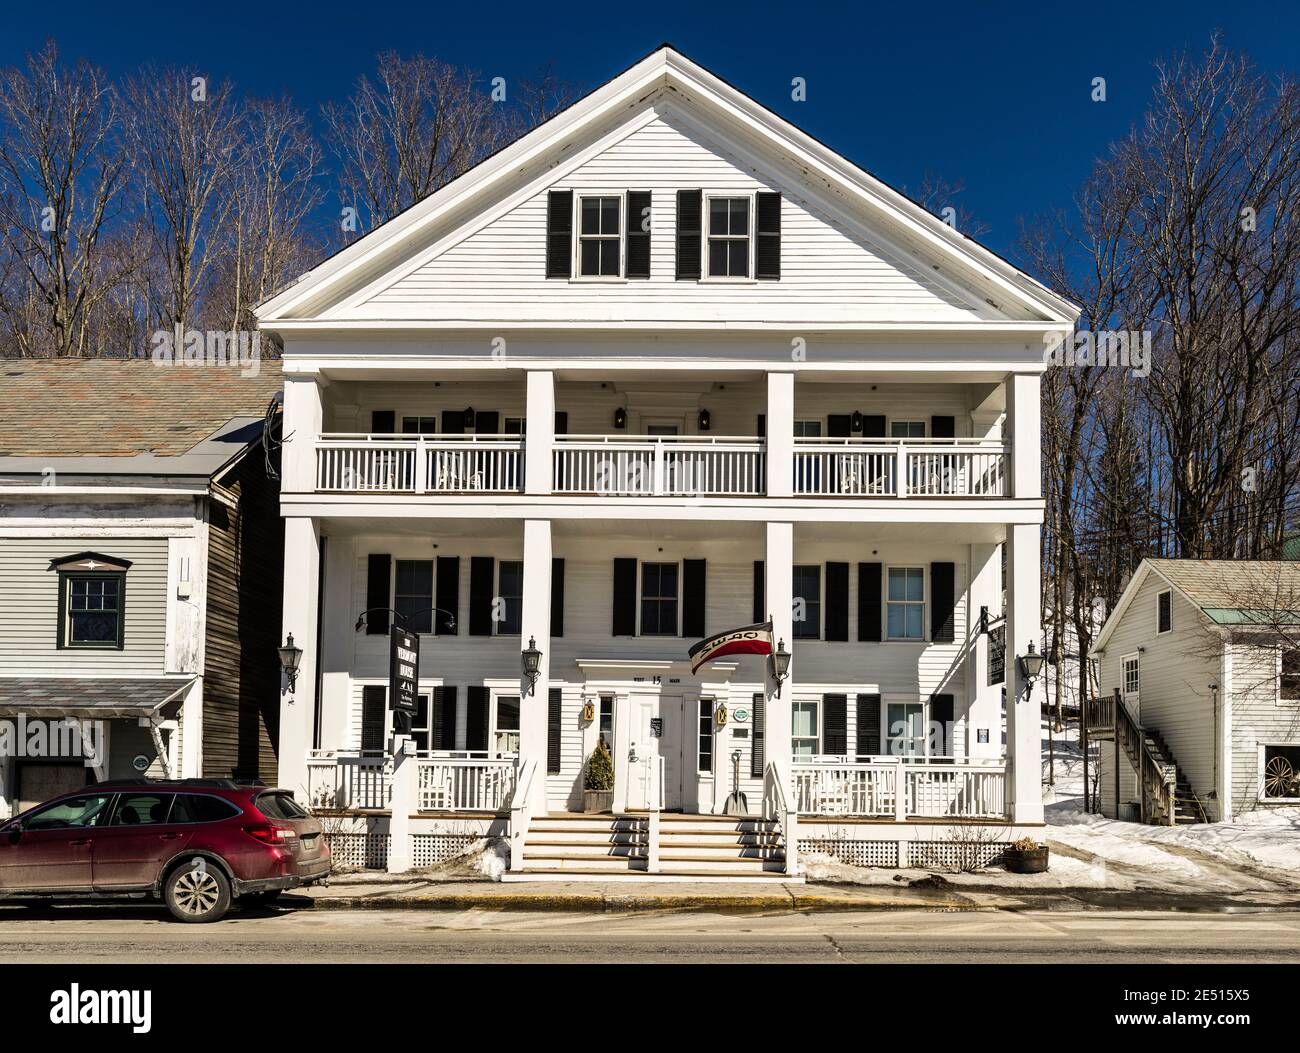 The Vermont House   Wilmington, Vermont, USA Stock Photo